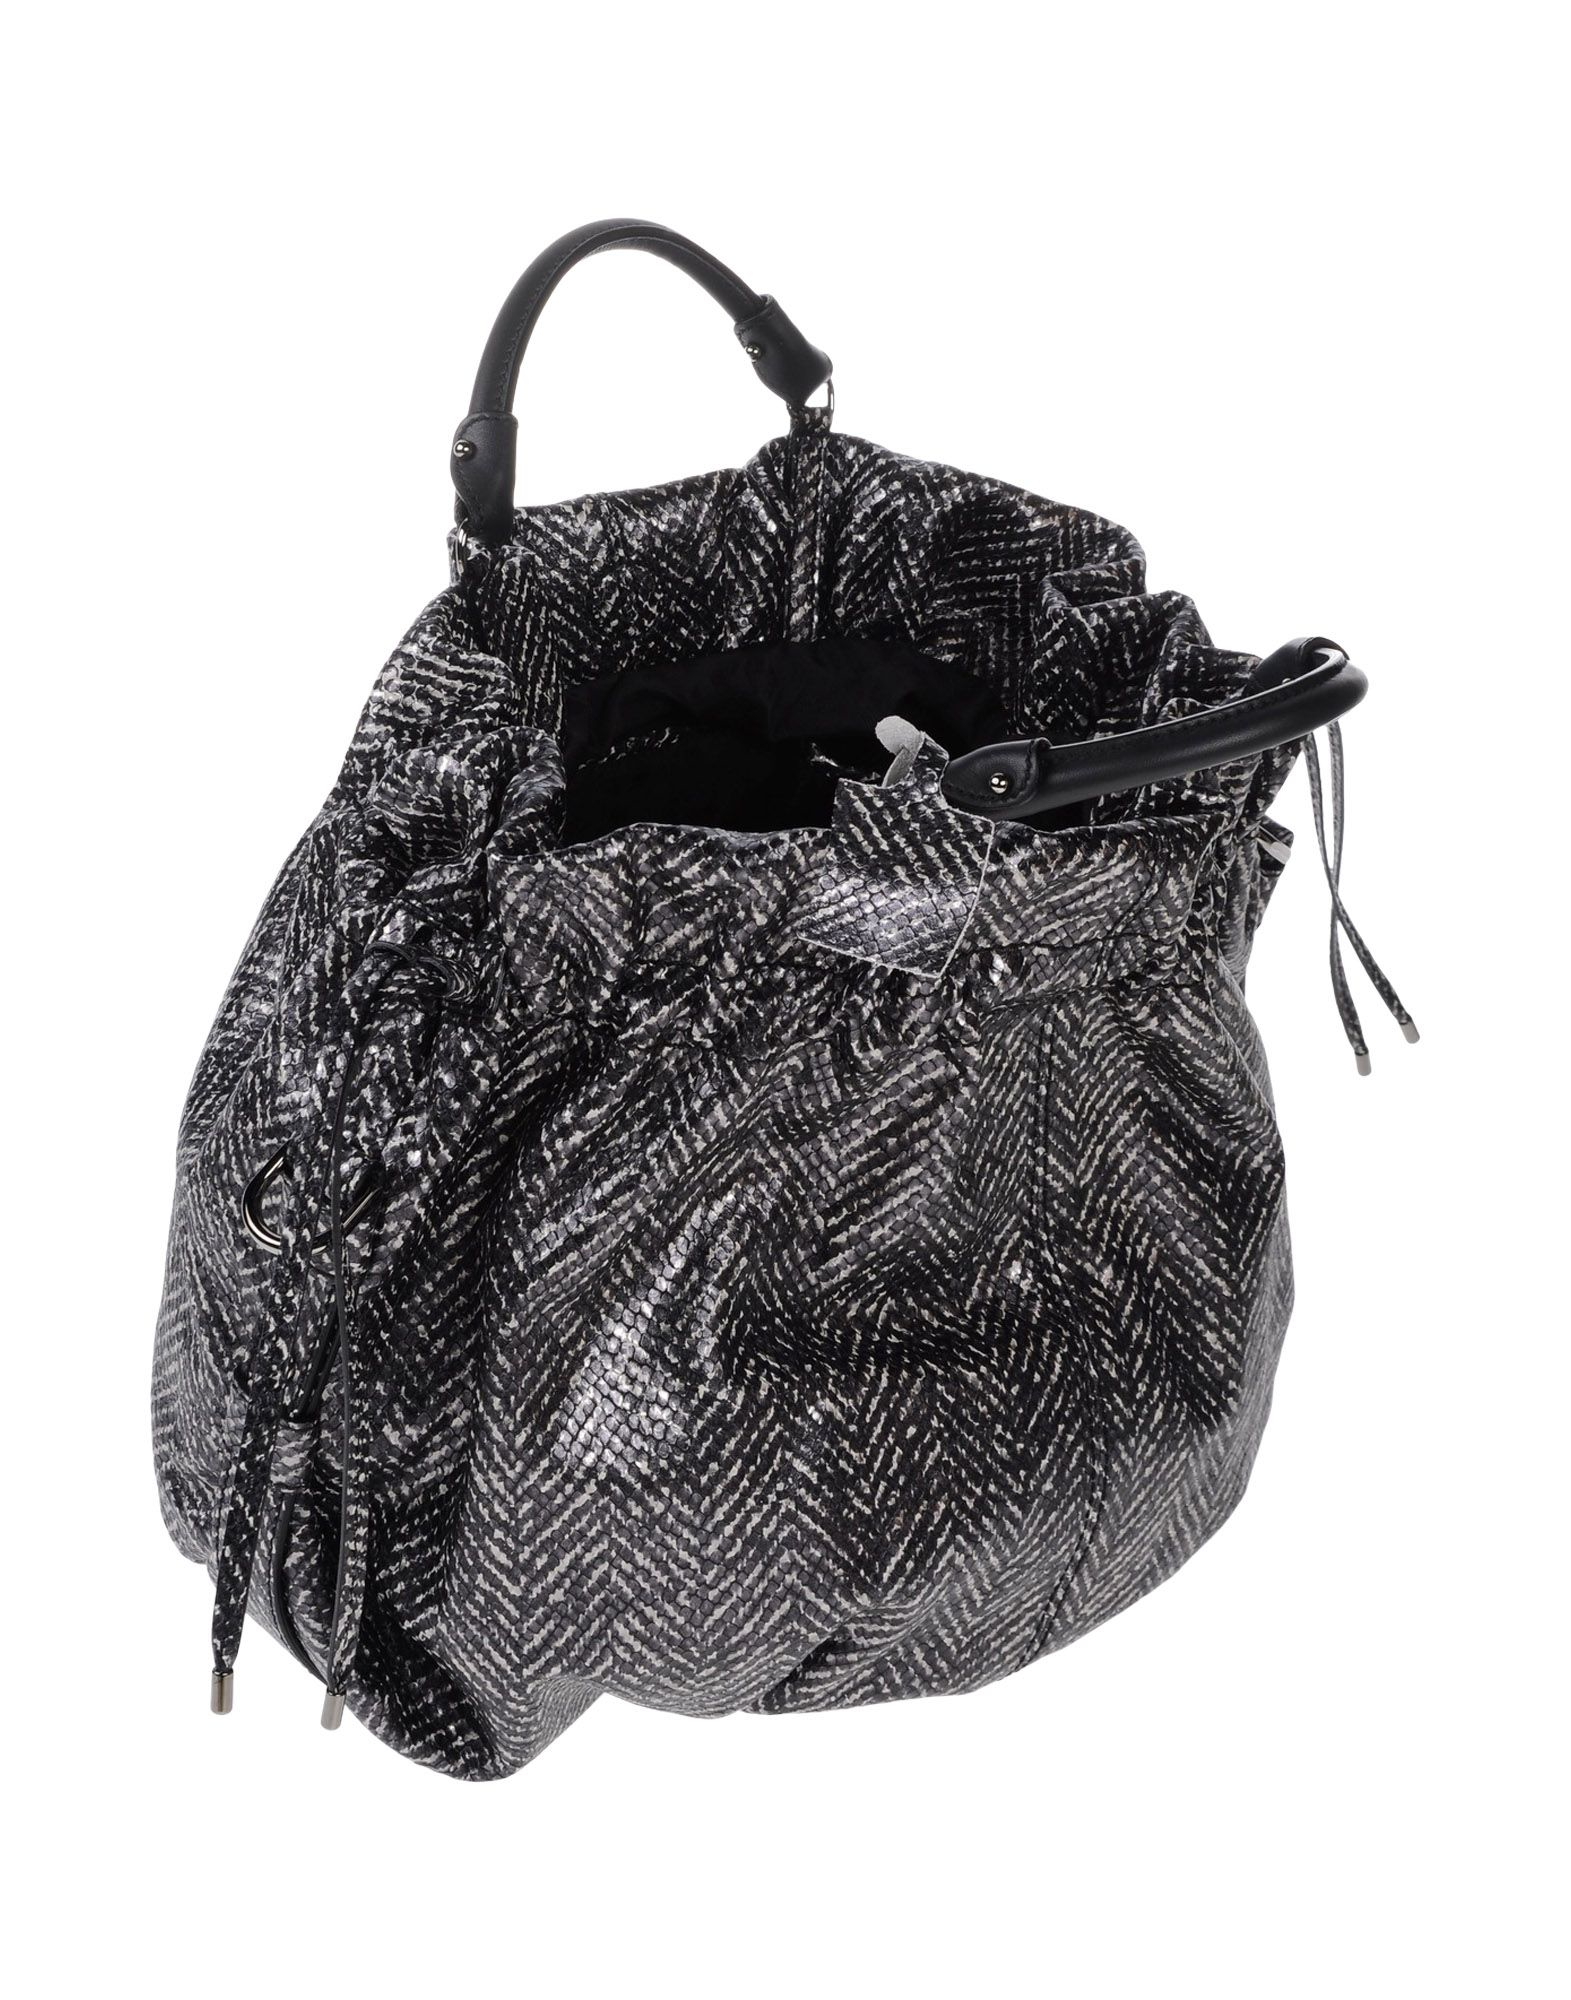 Lyst - Escada Handbag in Black